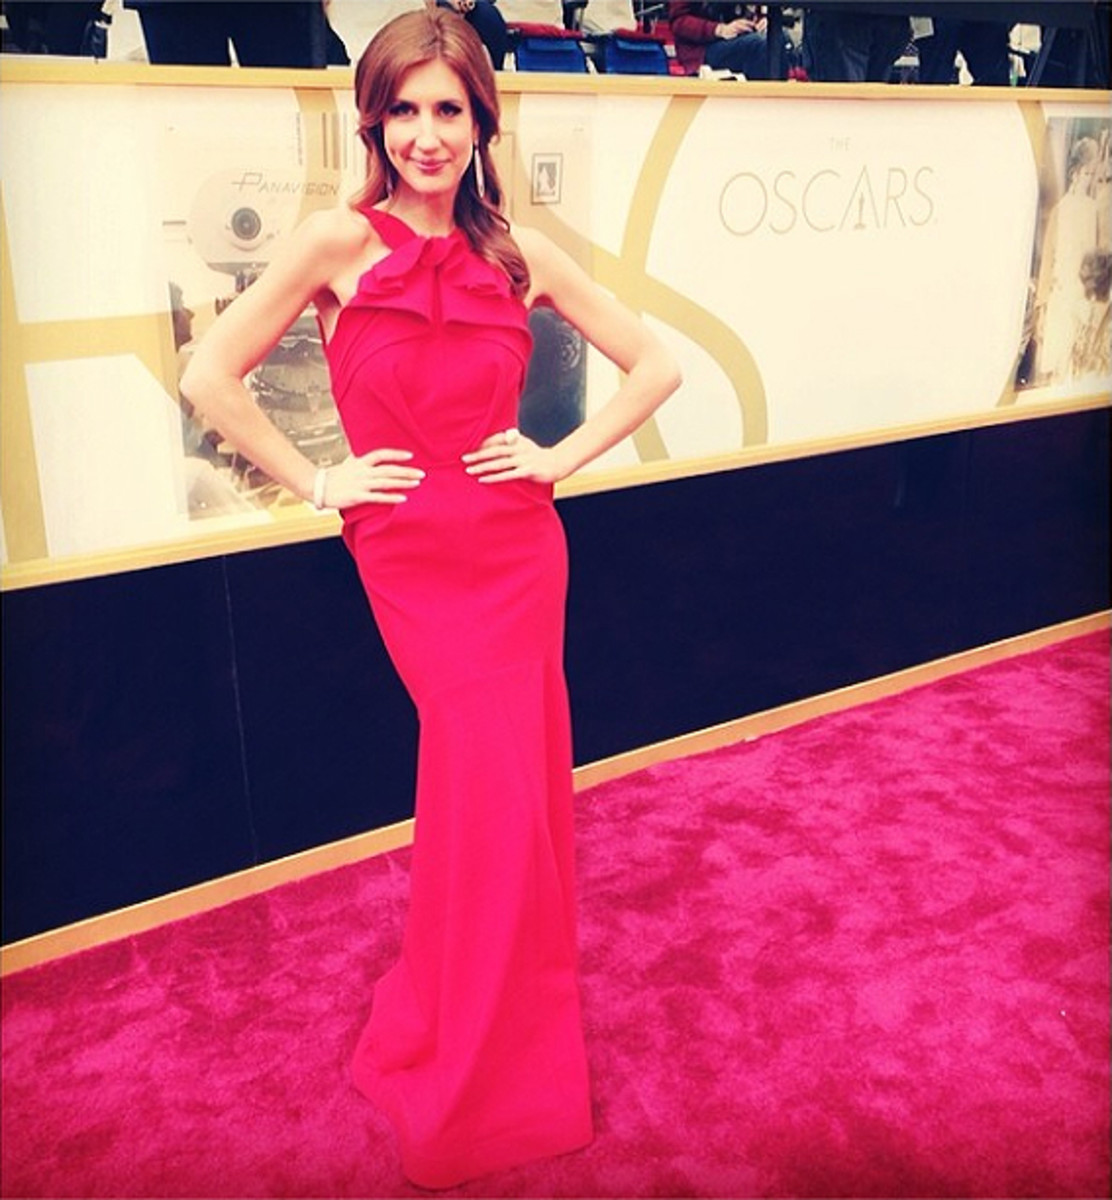 Jessi Cruikshank_Oscars 2014 red carpet_pre Jessi Cruikshank Rob Ford pre-Jimmy Kimmel interview